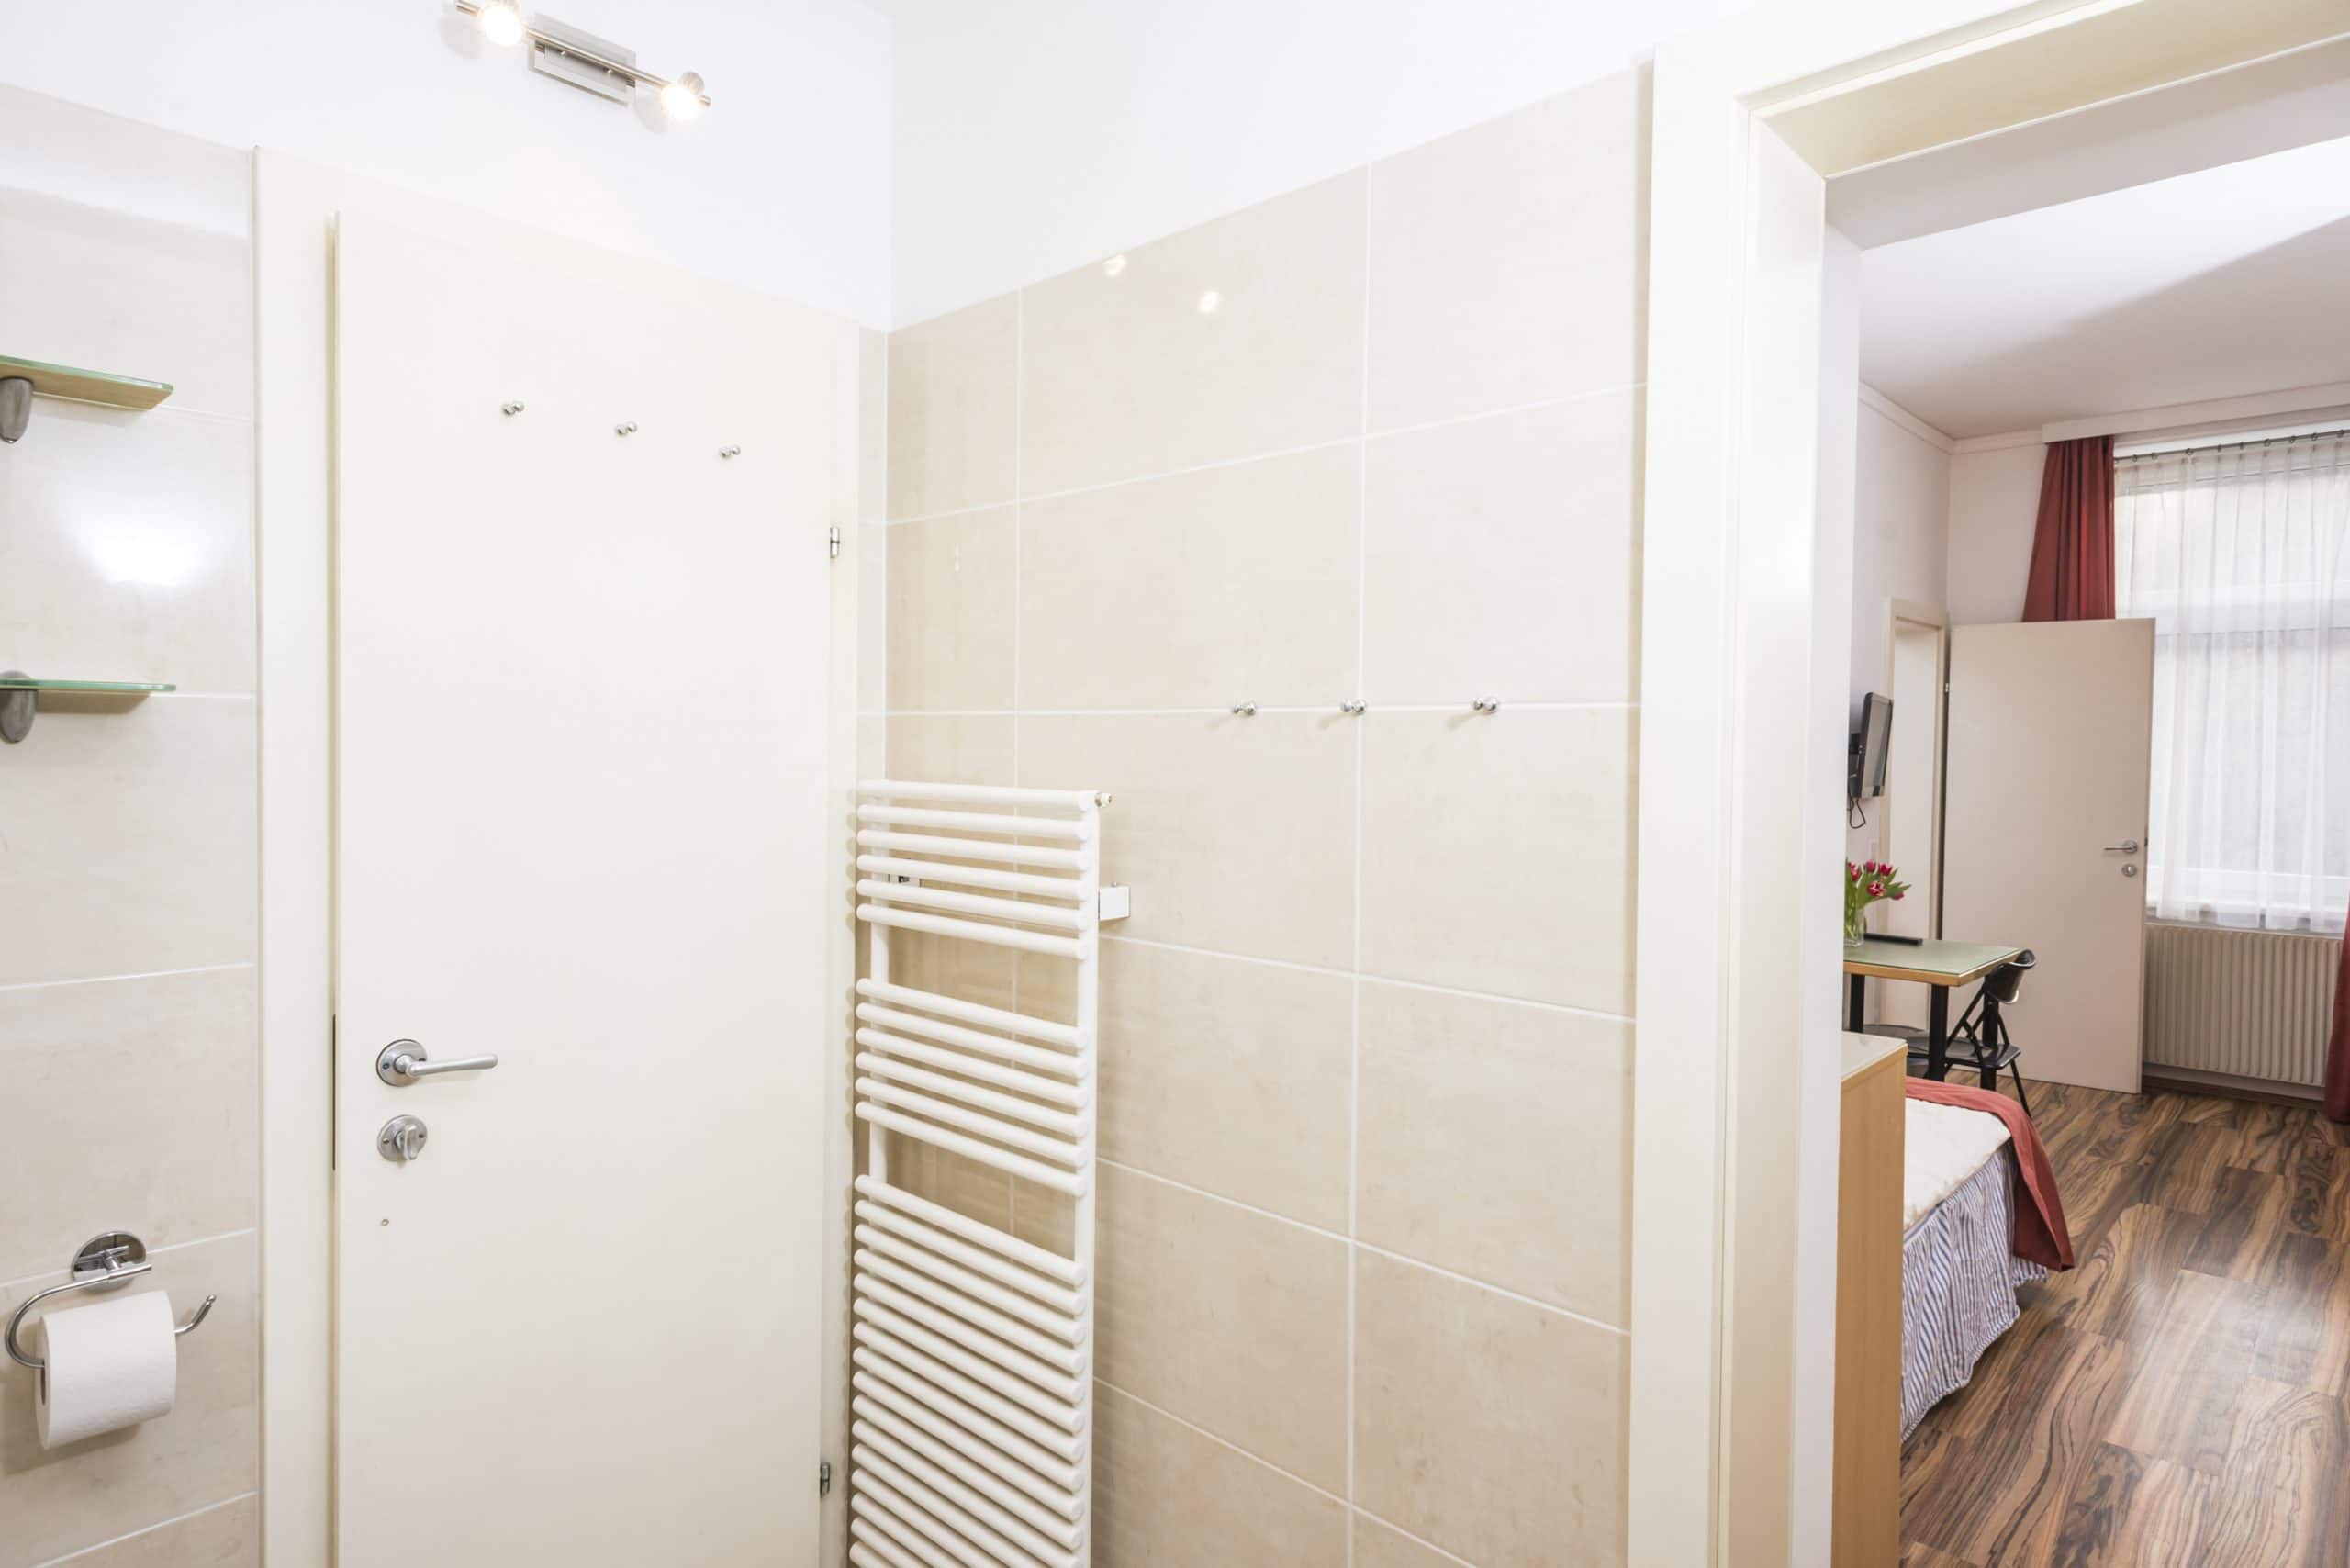 Apartment 7 Bathroom with heated towel rail